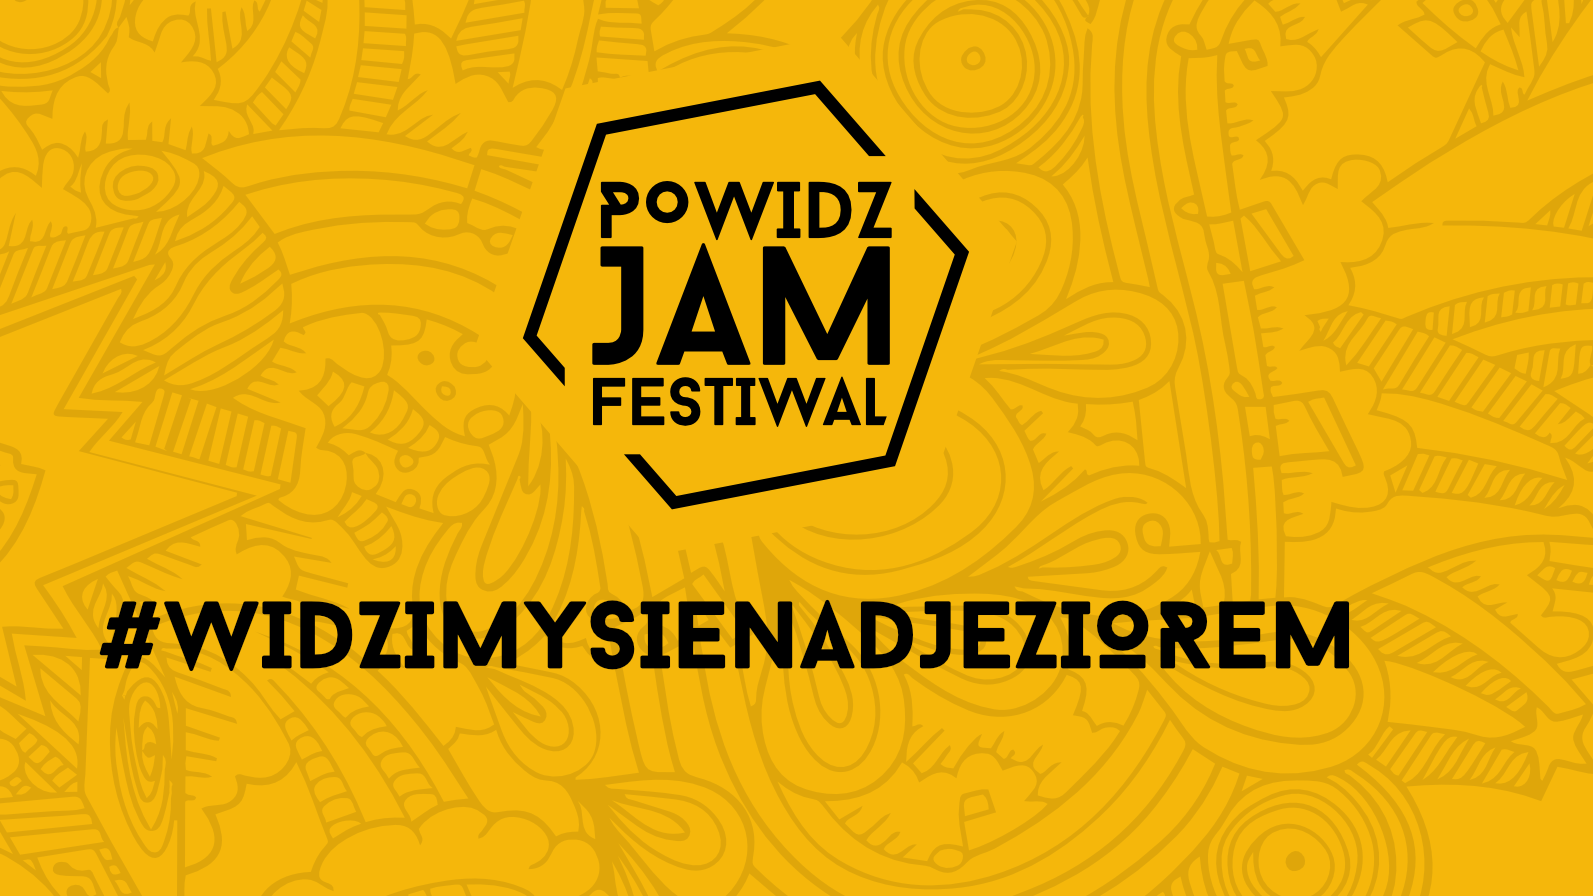 Powidz Jam Festiwal Facebook - Powidz Jam Festiwal Facebook